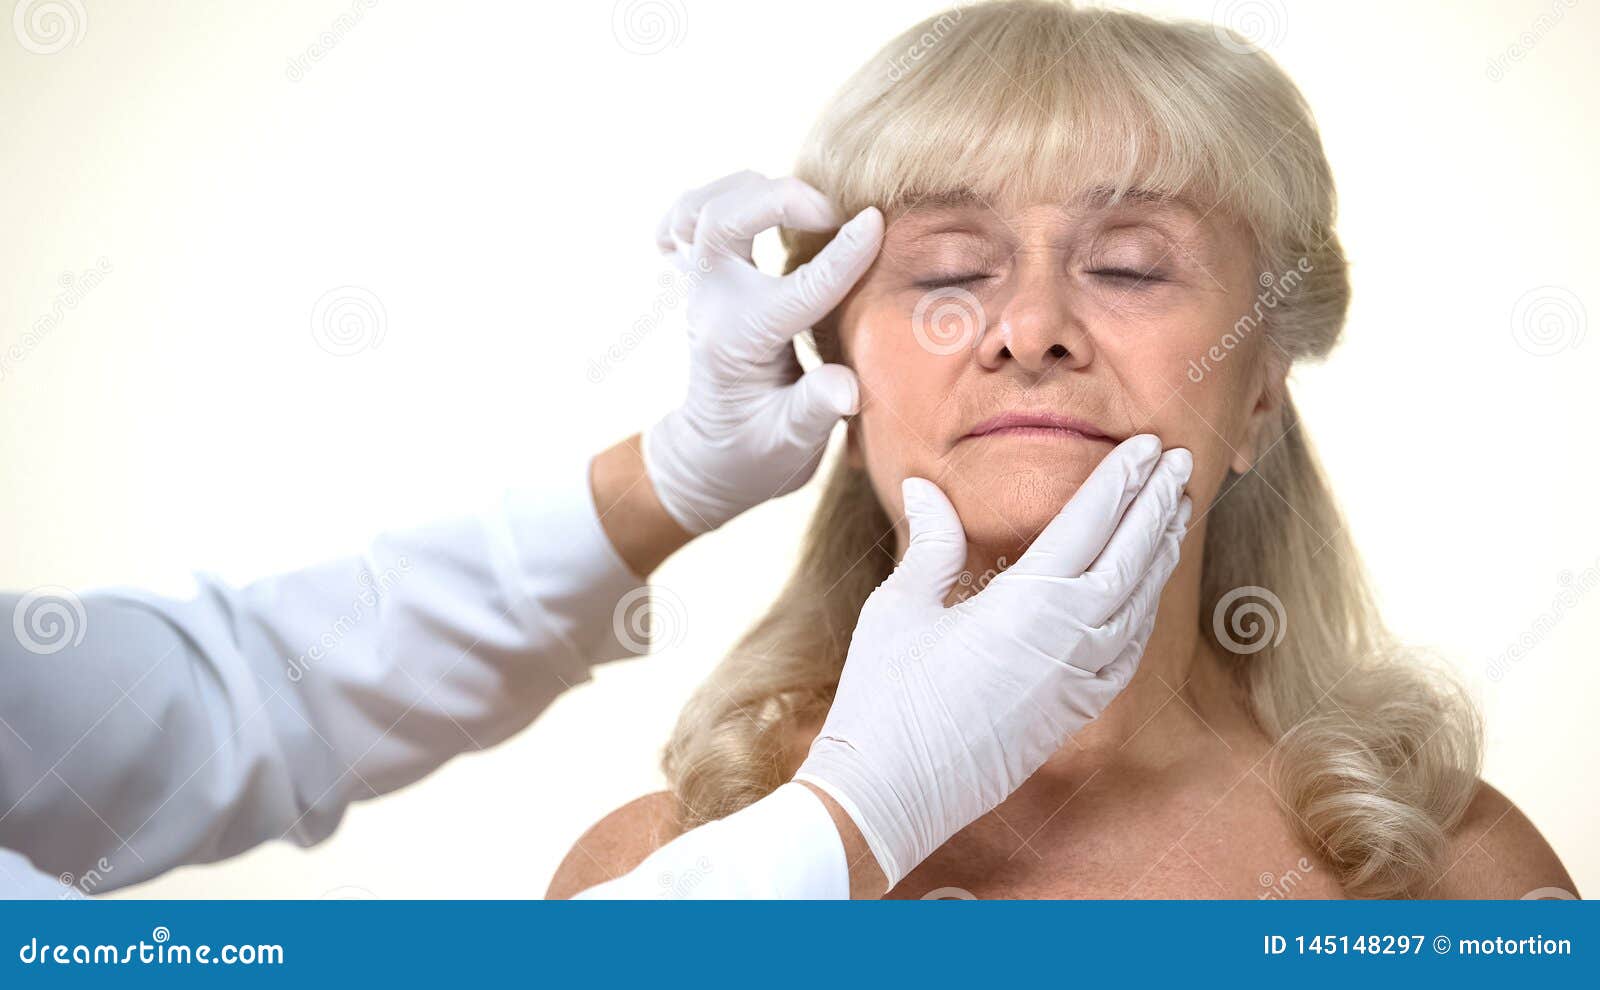 Dermatologist examining elderly female patient skin, wrinkles removal, beauty, stock photo